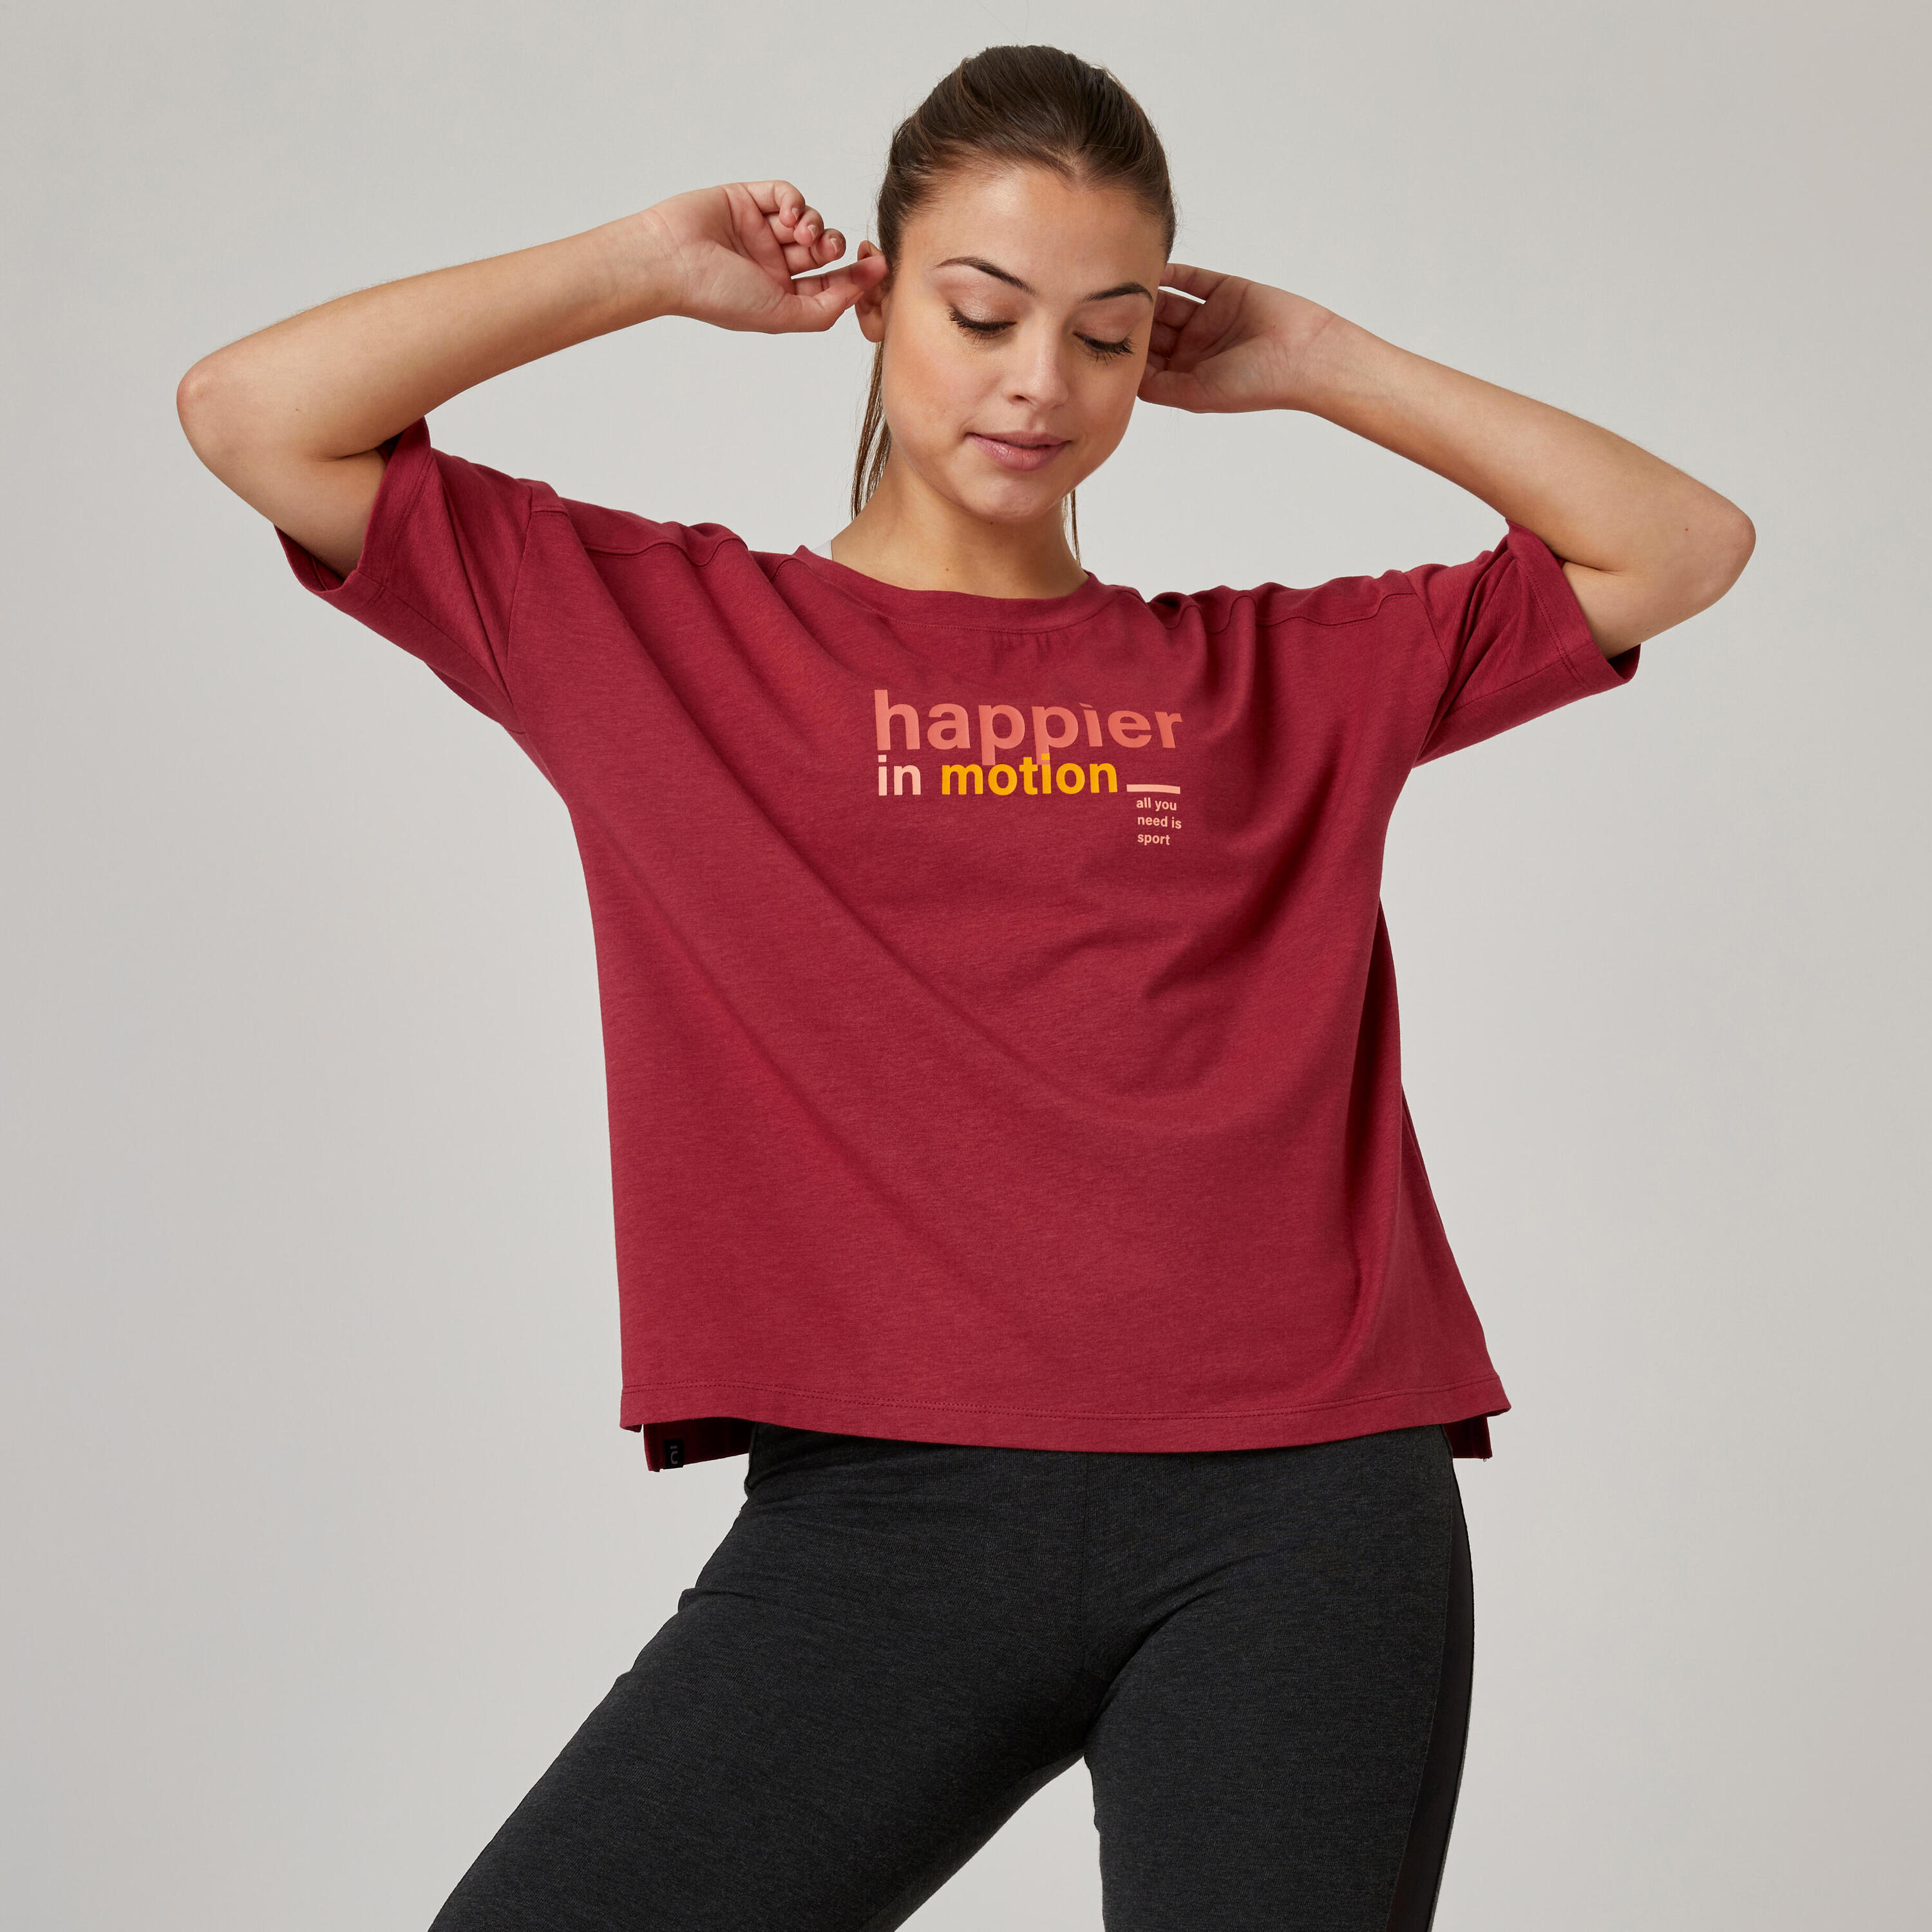 DOMYOS Women's Short-Sleeved Loose-Fit Majority Cotton Fitness T-Shirt 520 - Burgundy